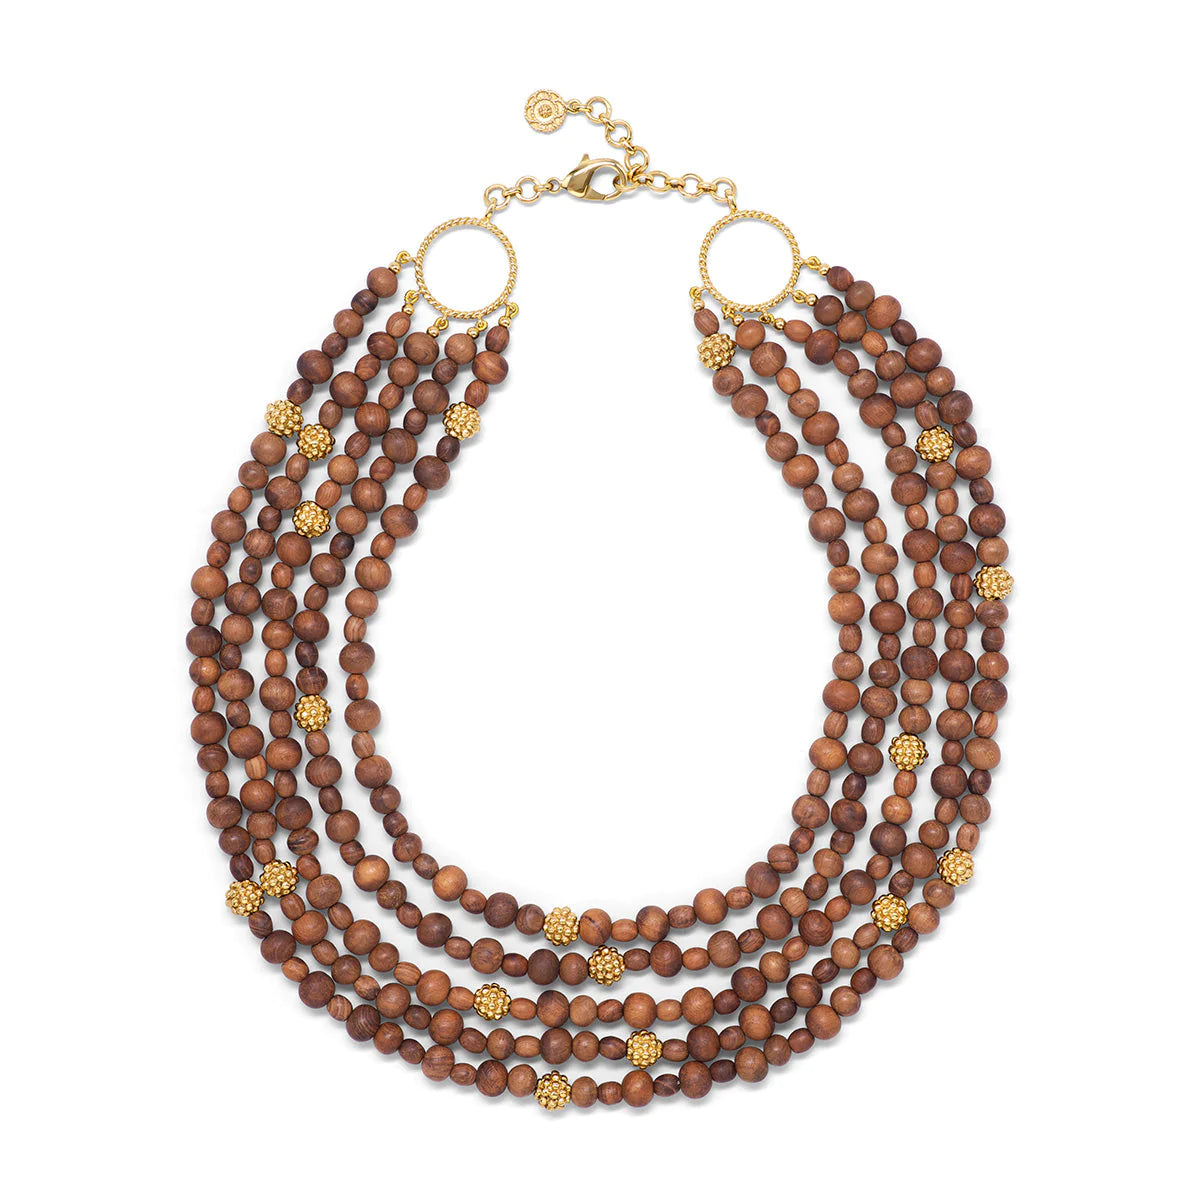 CAPUCINE DE WULF Earth Goddess Beads 5-Strand Necklace - Teak